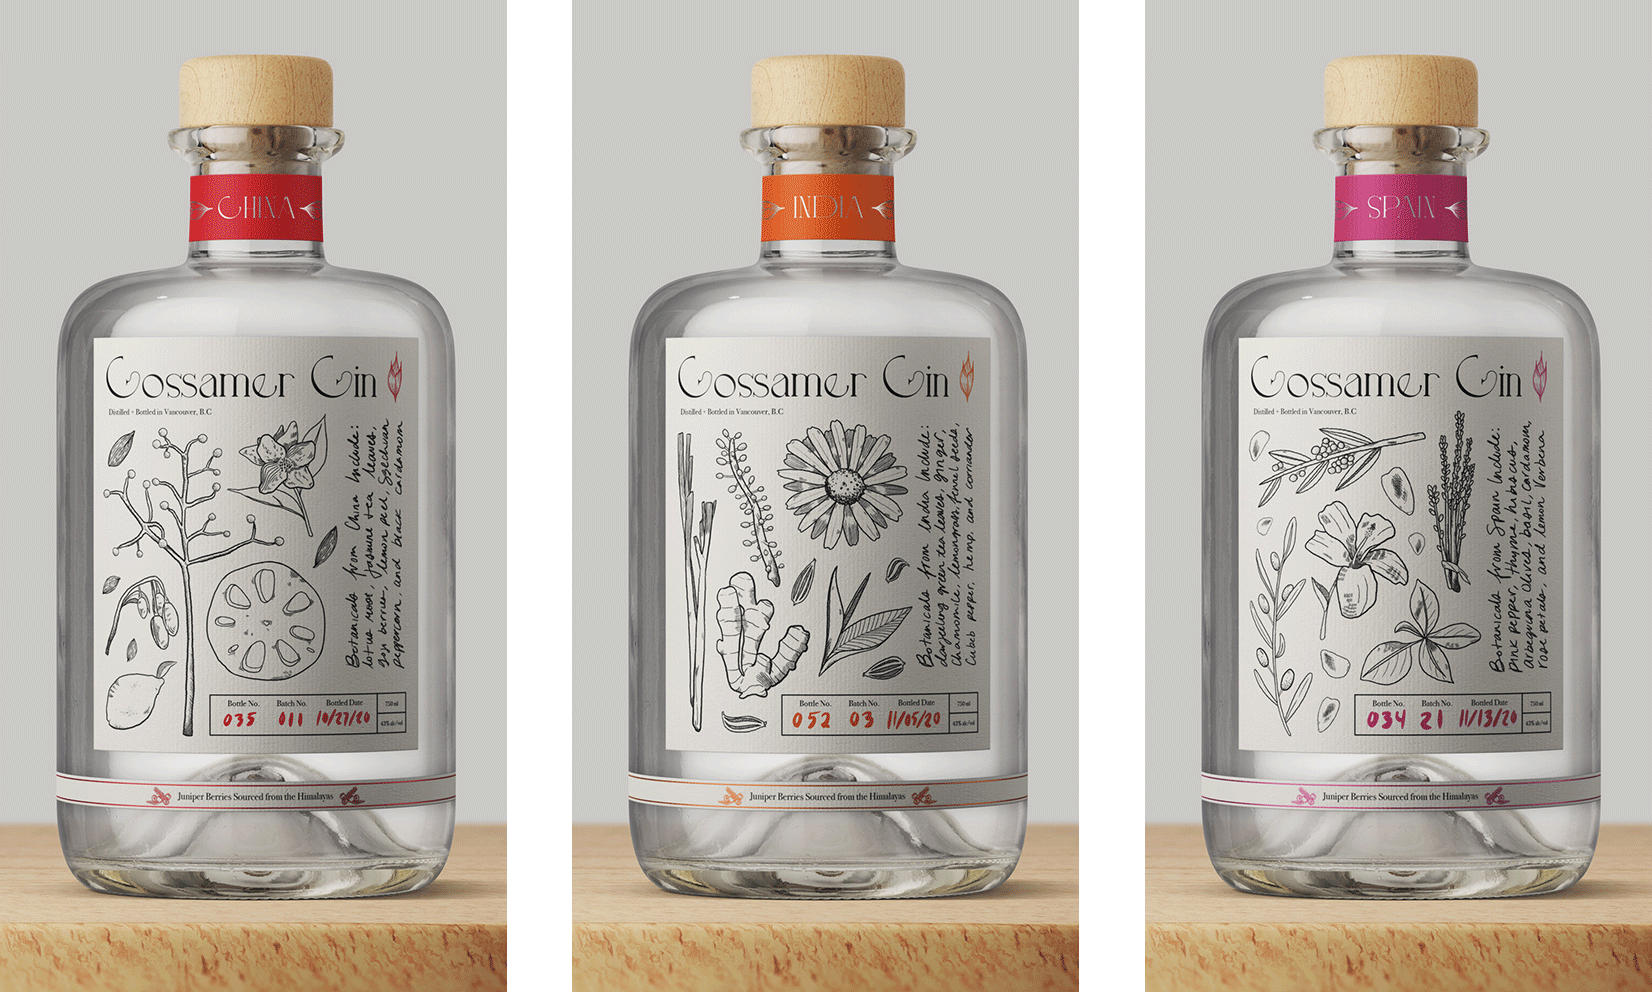 Three gin bottles side by side.